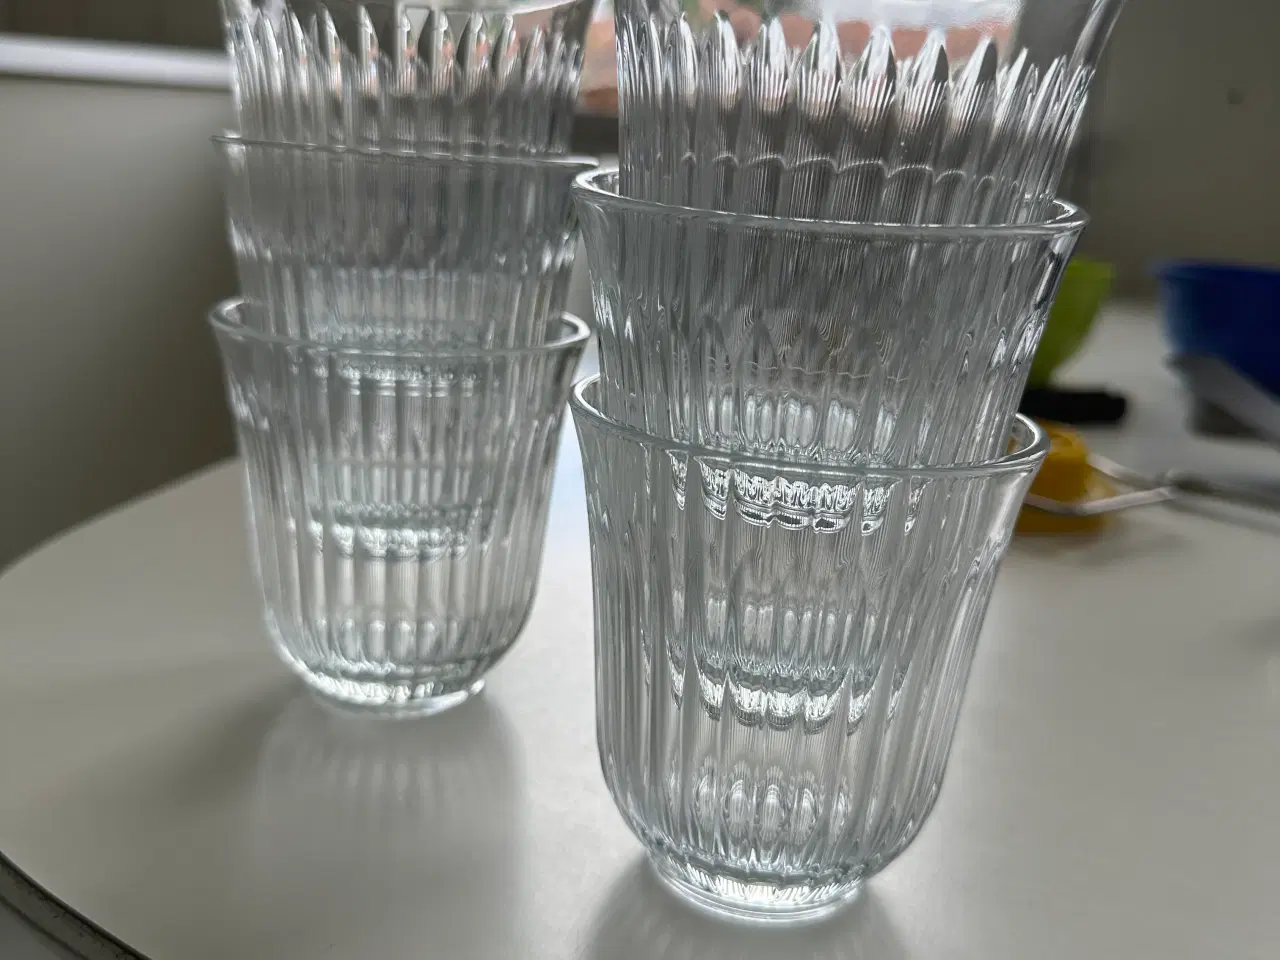 Billede 3 - Lyngby glas. Store og små. Køkken grej